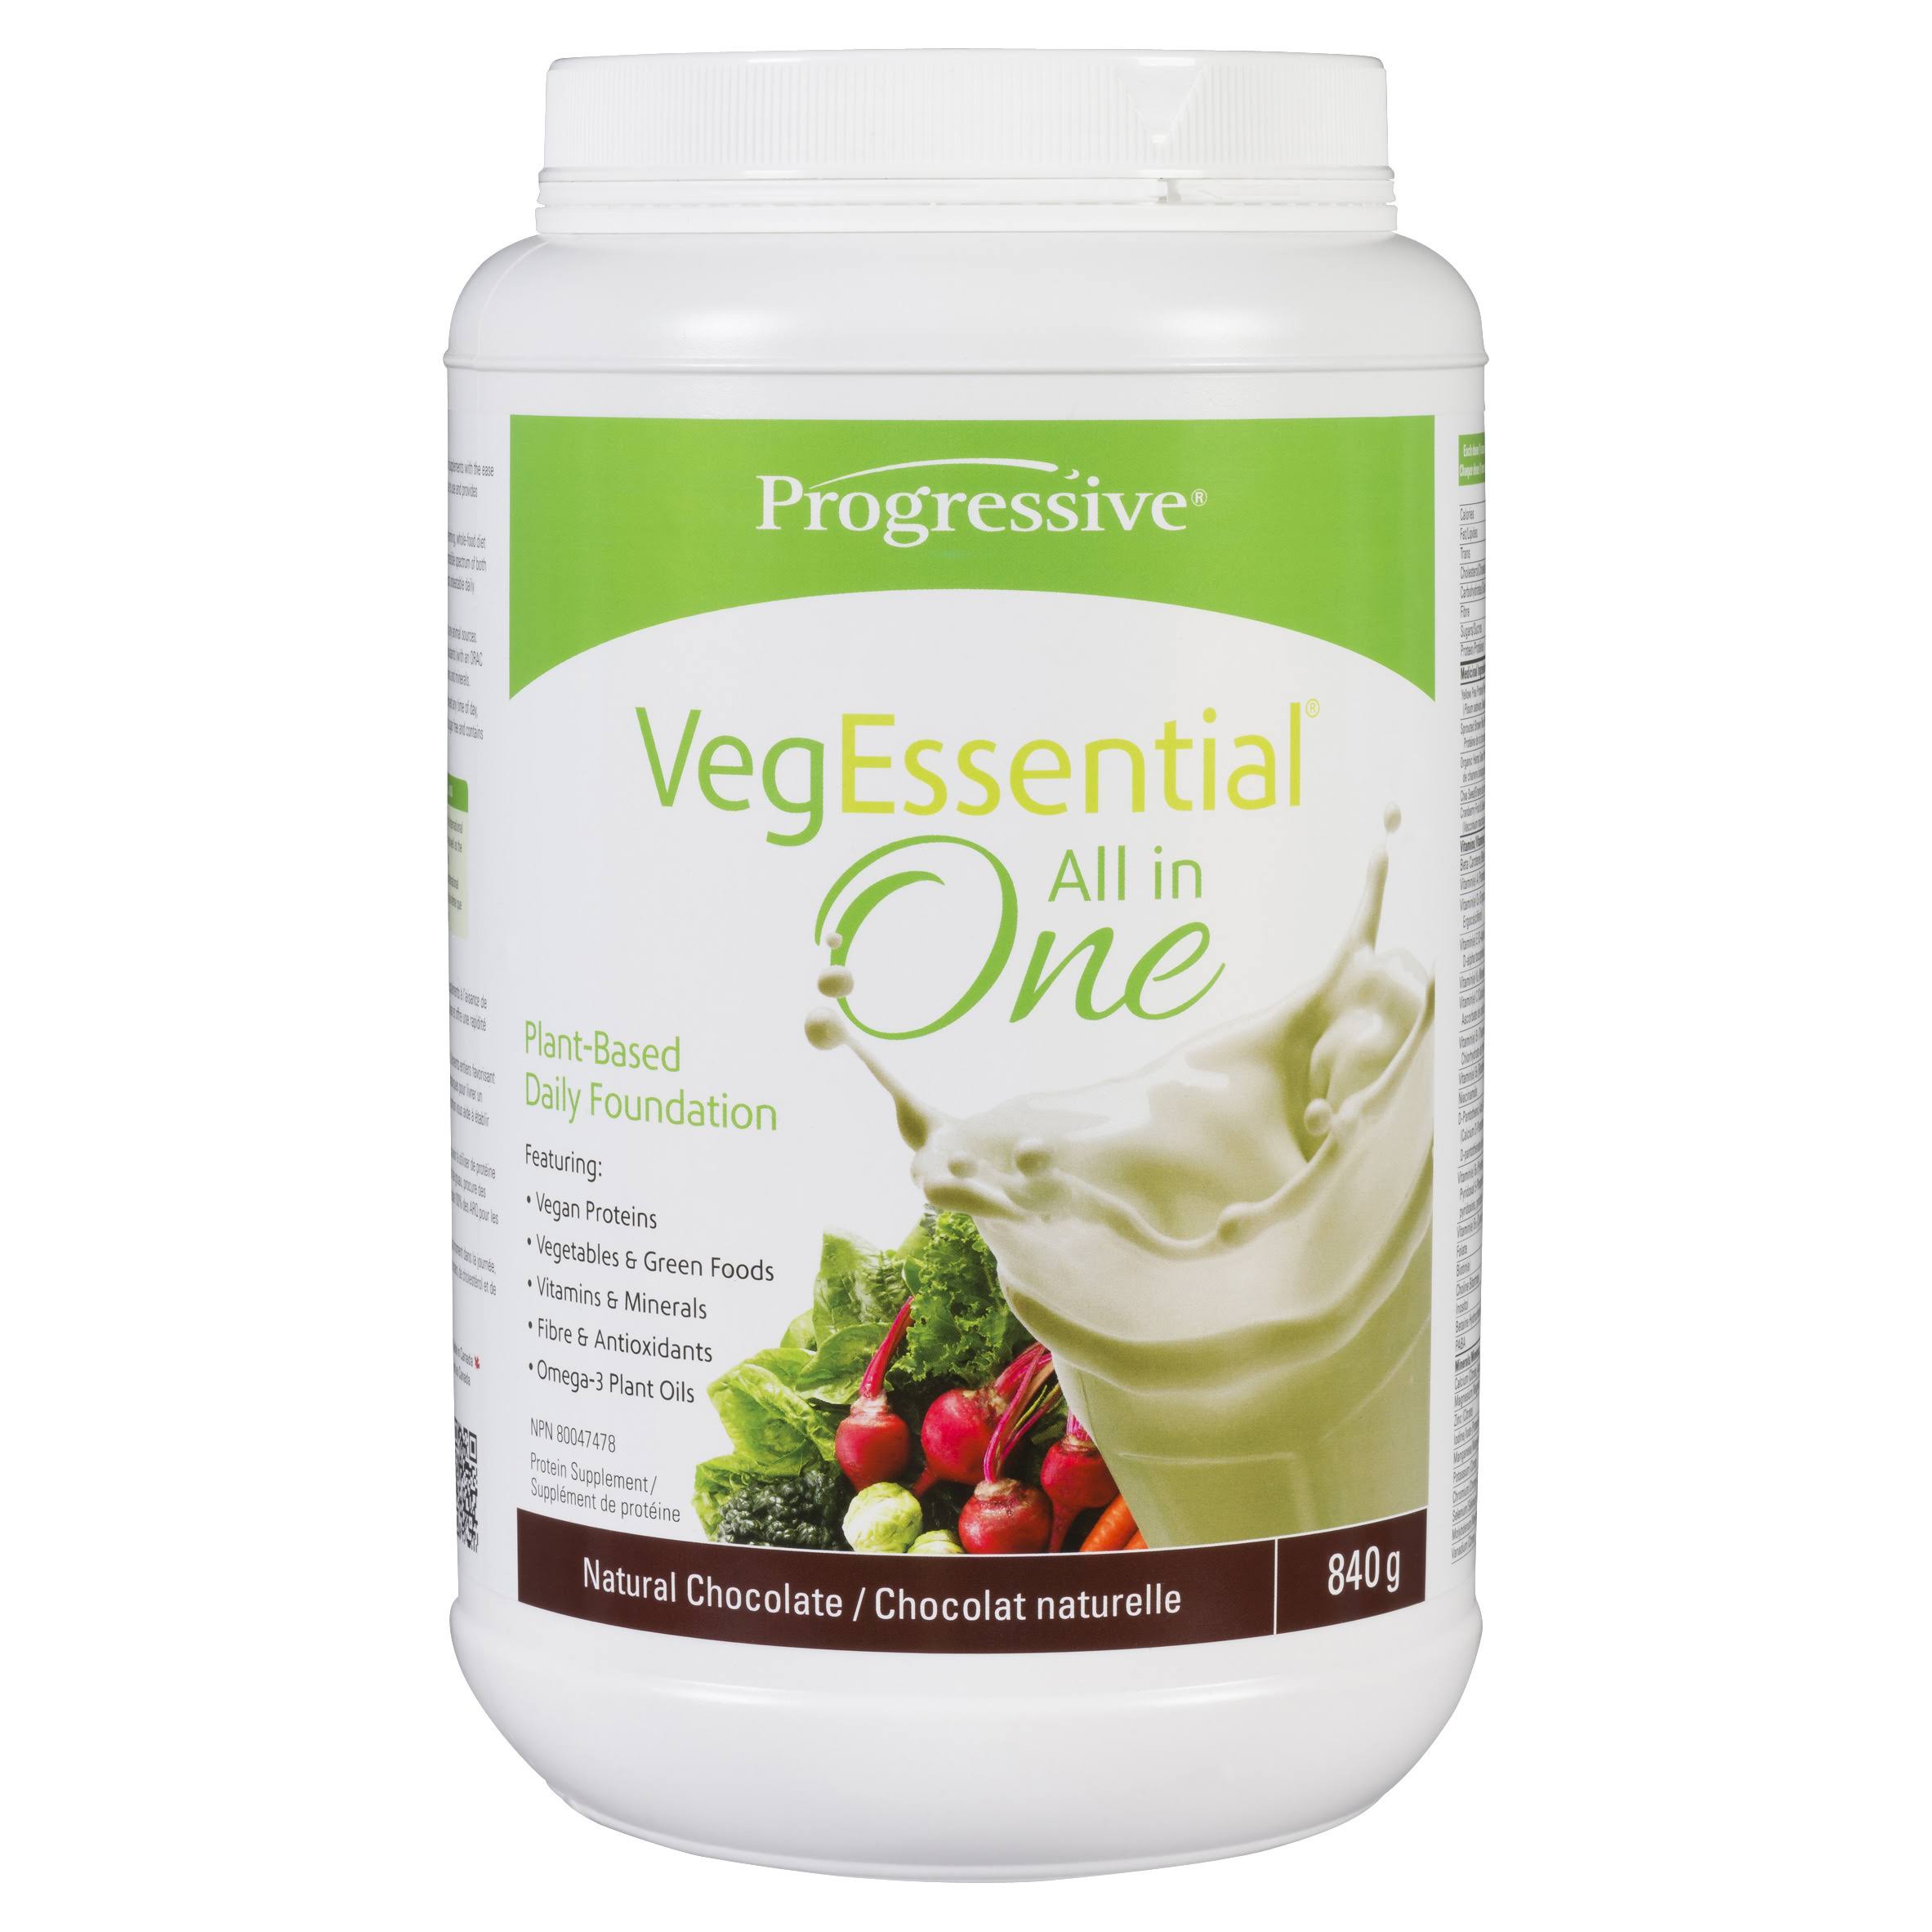 Progressive Veg Essential Supplement - Chocolate, 840g